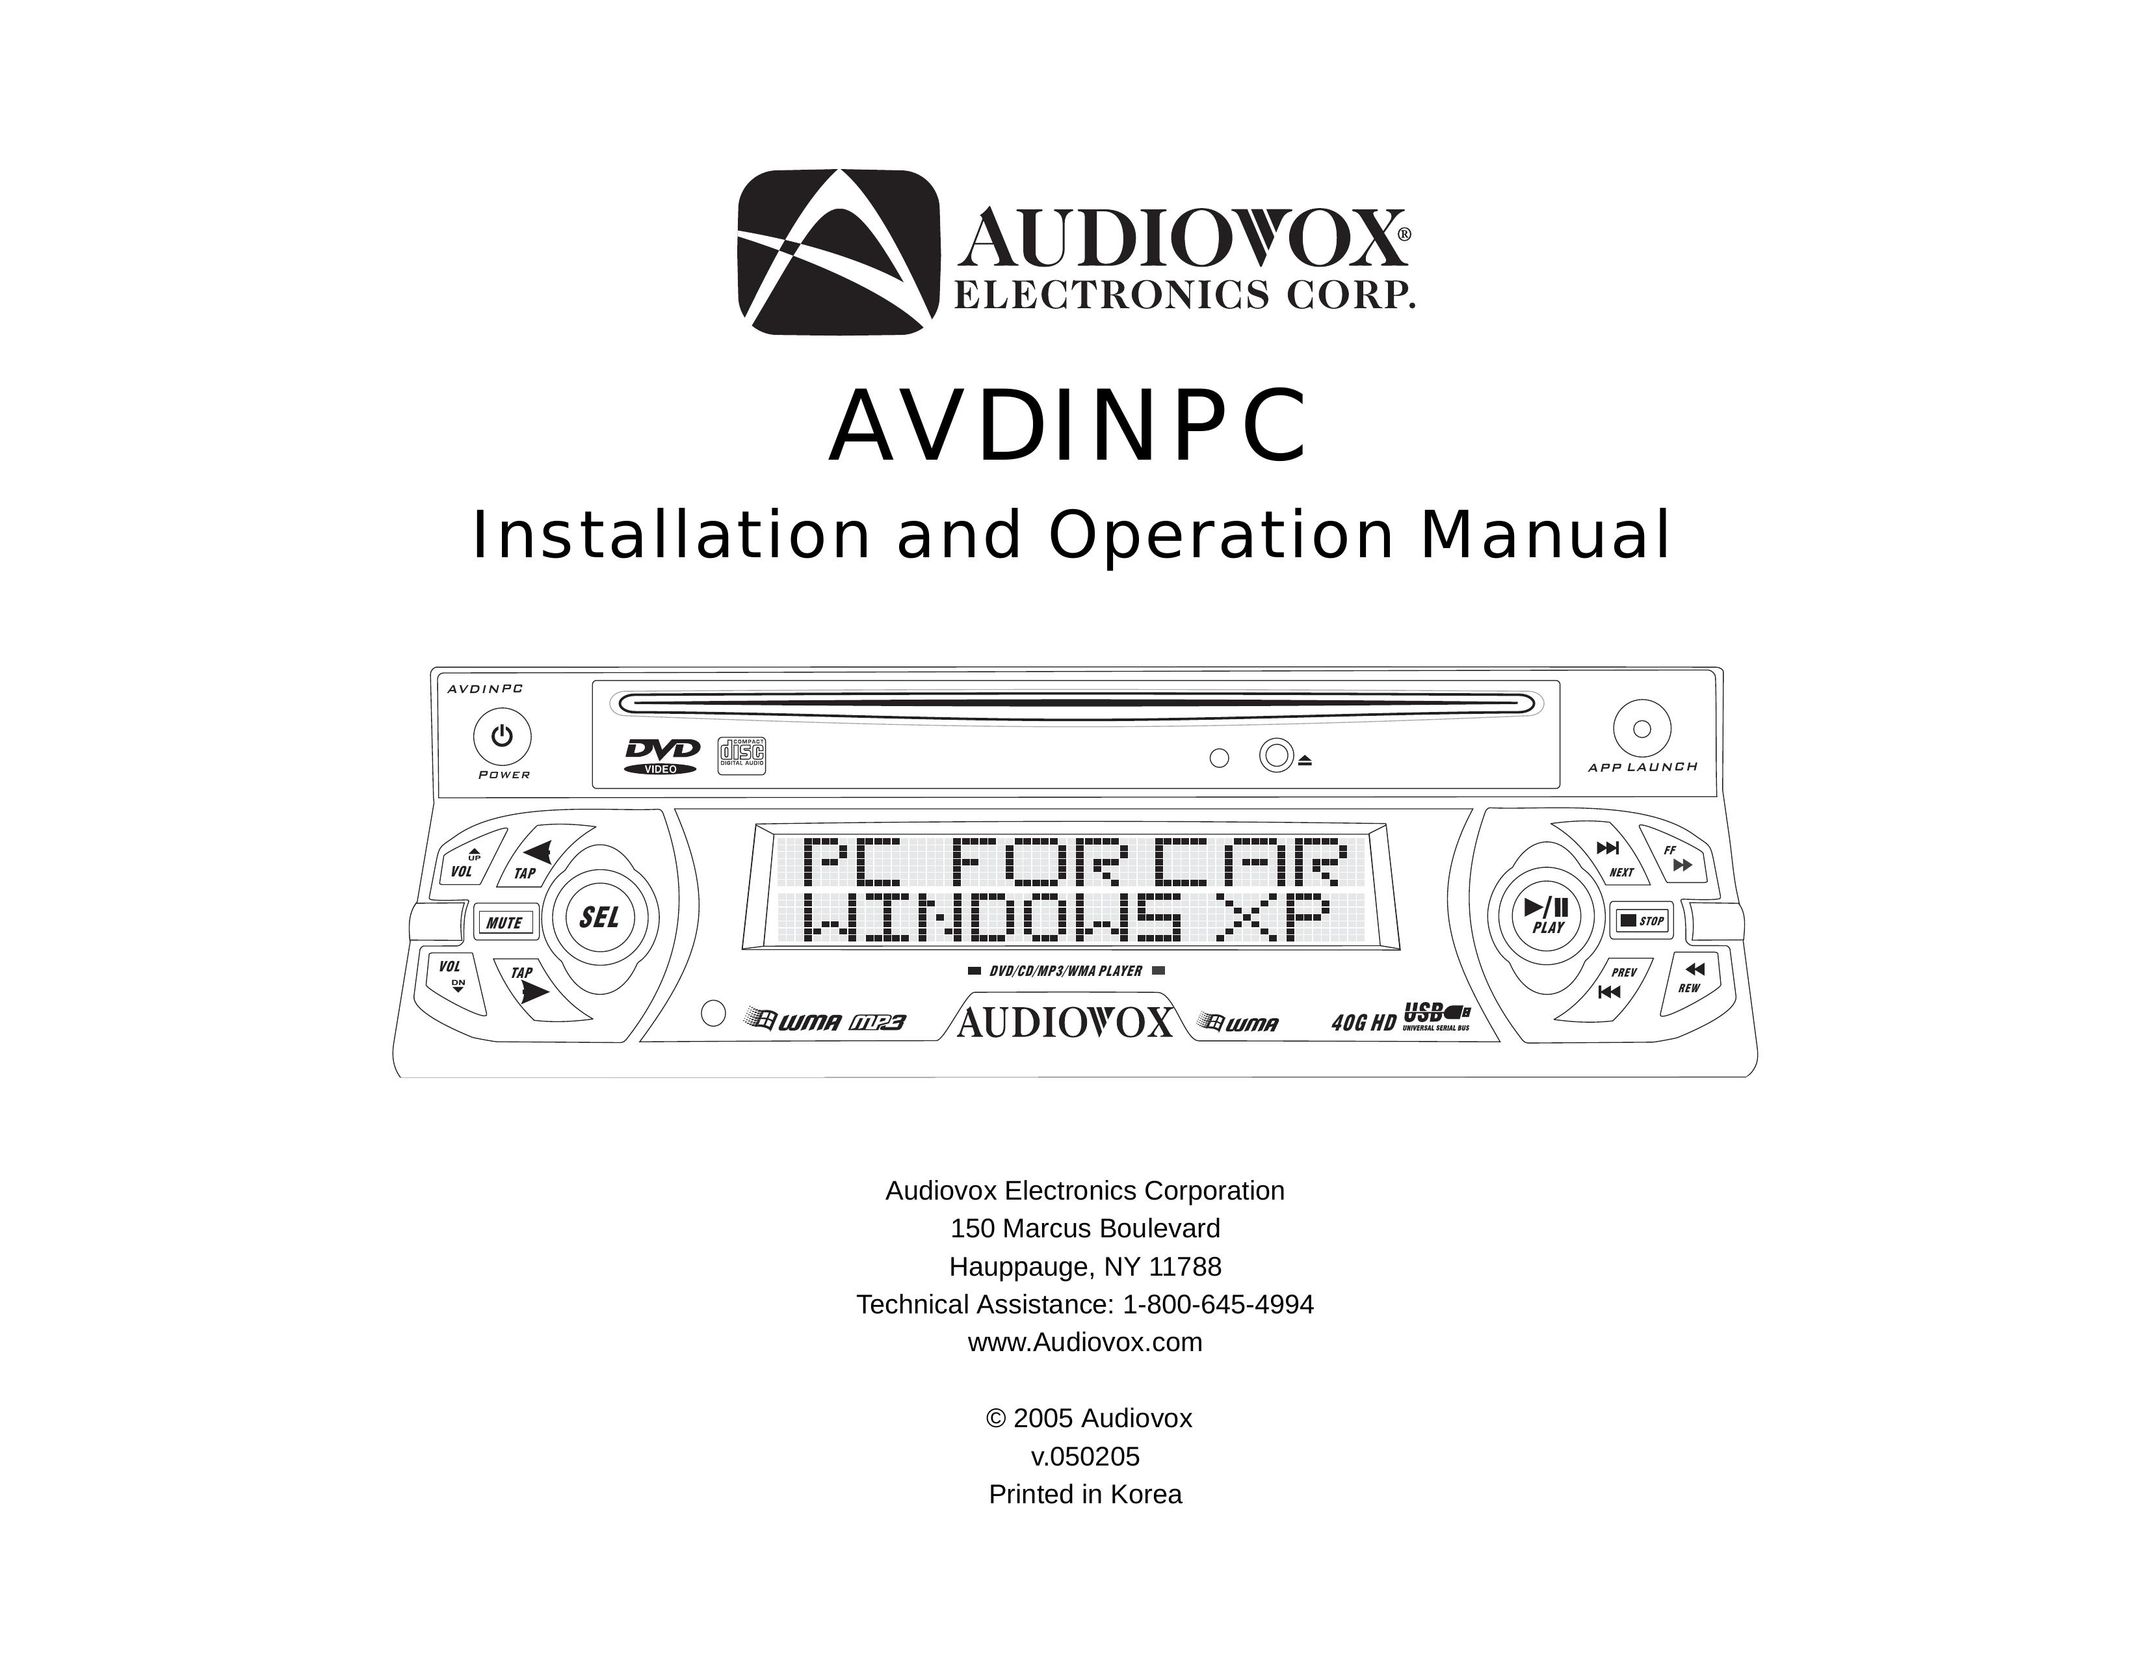 Audiovox AVDINPC Car Stereo System User Manual